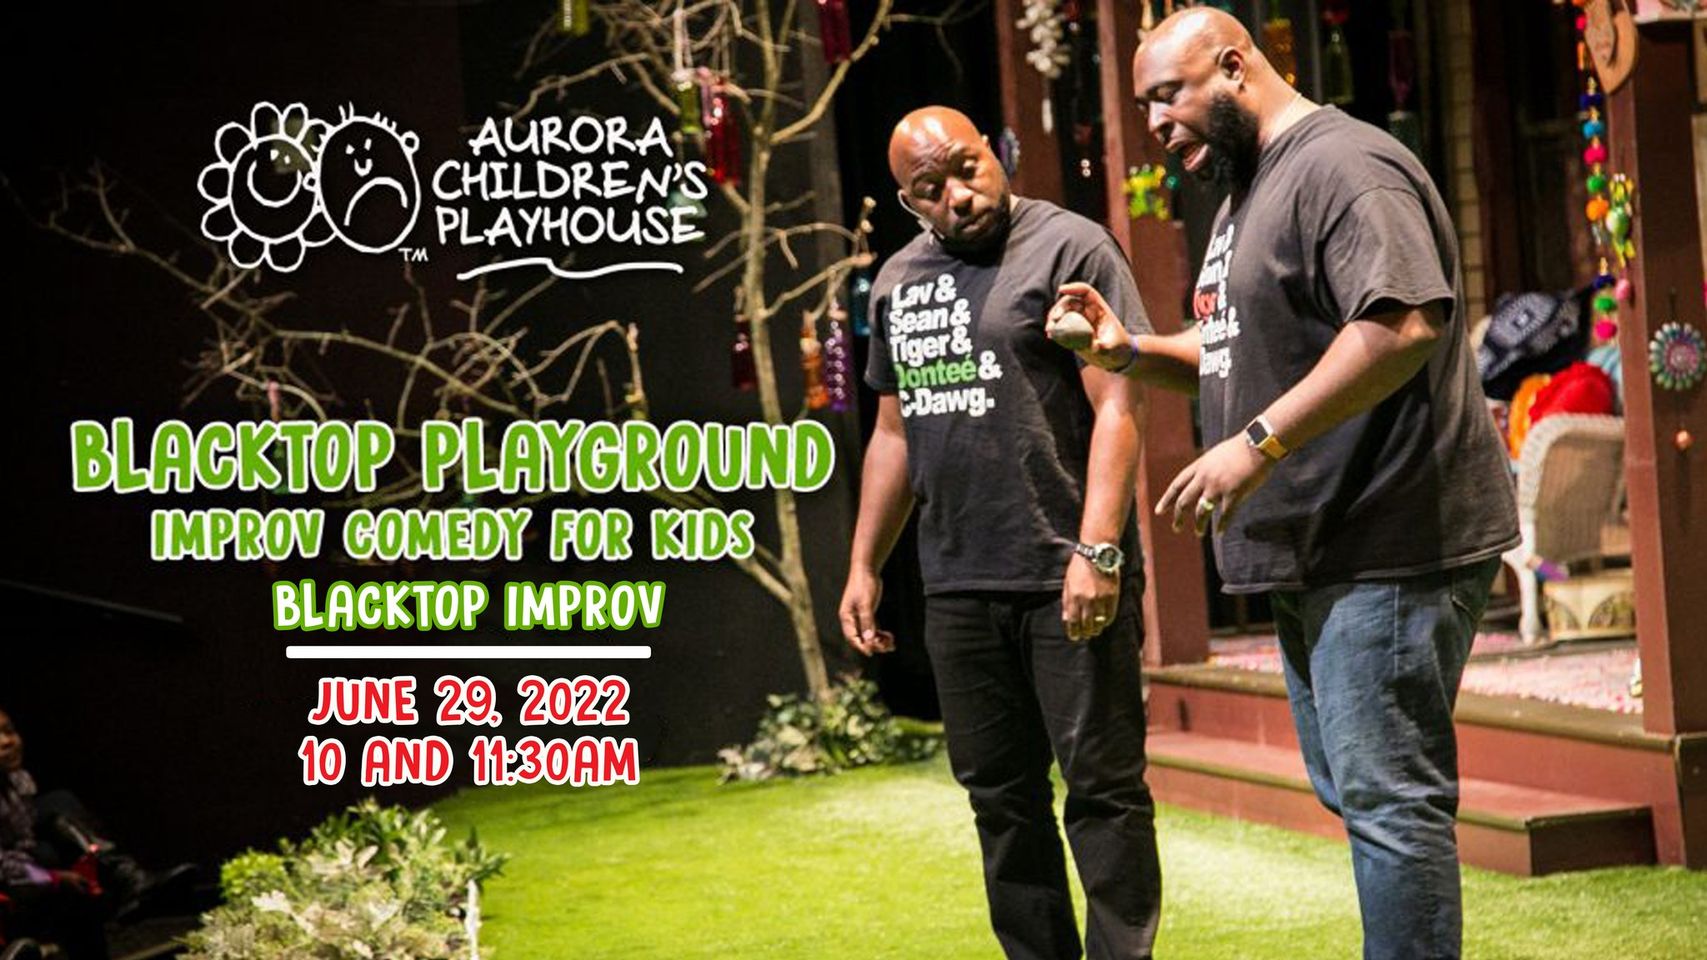 Blacktop-Playground-Improv-Comedy-for-Kids